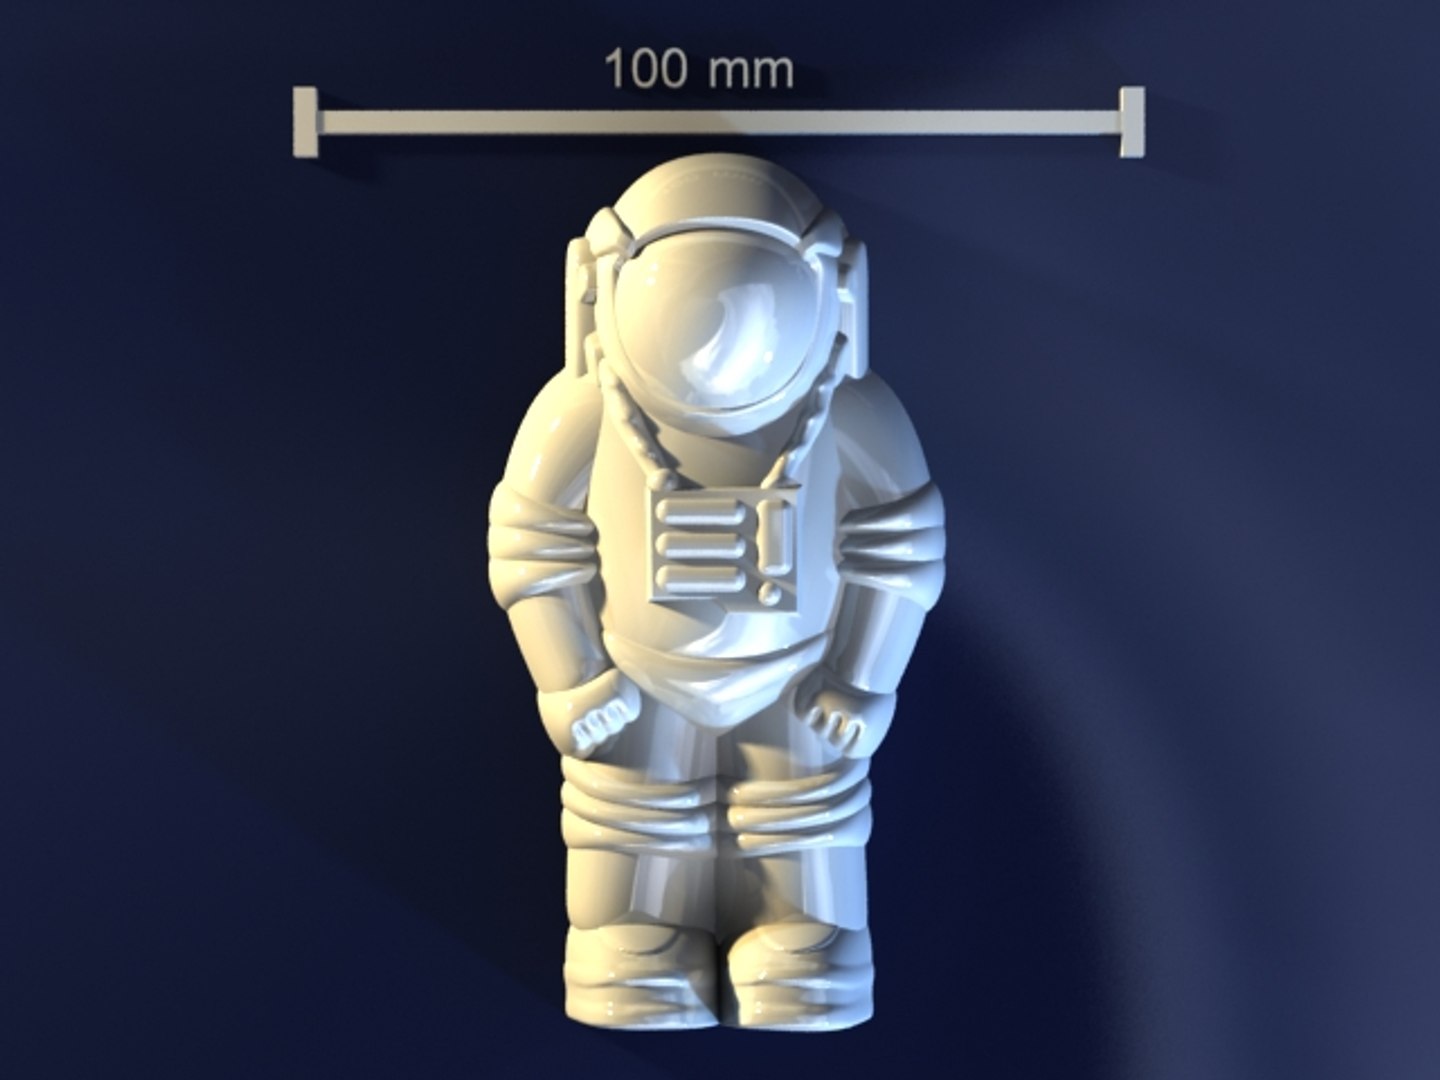 astronaut mold hand 3d obj https://p.turbosquid.com/ts-thumb/yf/o3Ji4O/pcsPNdxu/astronaut0000/jpg/1411322394/1920x1080/fit_q87/92a58fce575d95782a35de5f12c9a54e30529516/astronaut0000.jpg